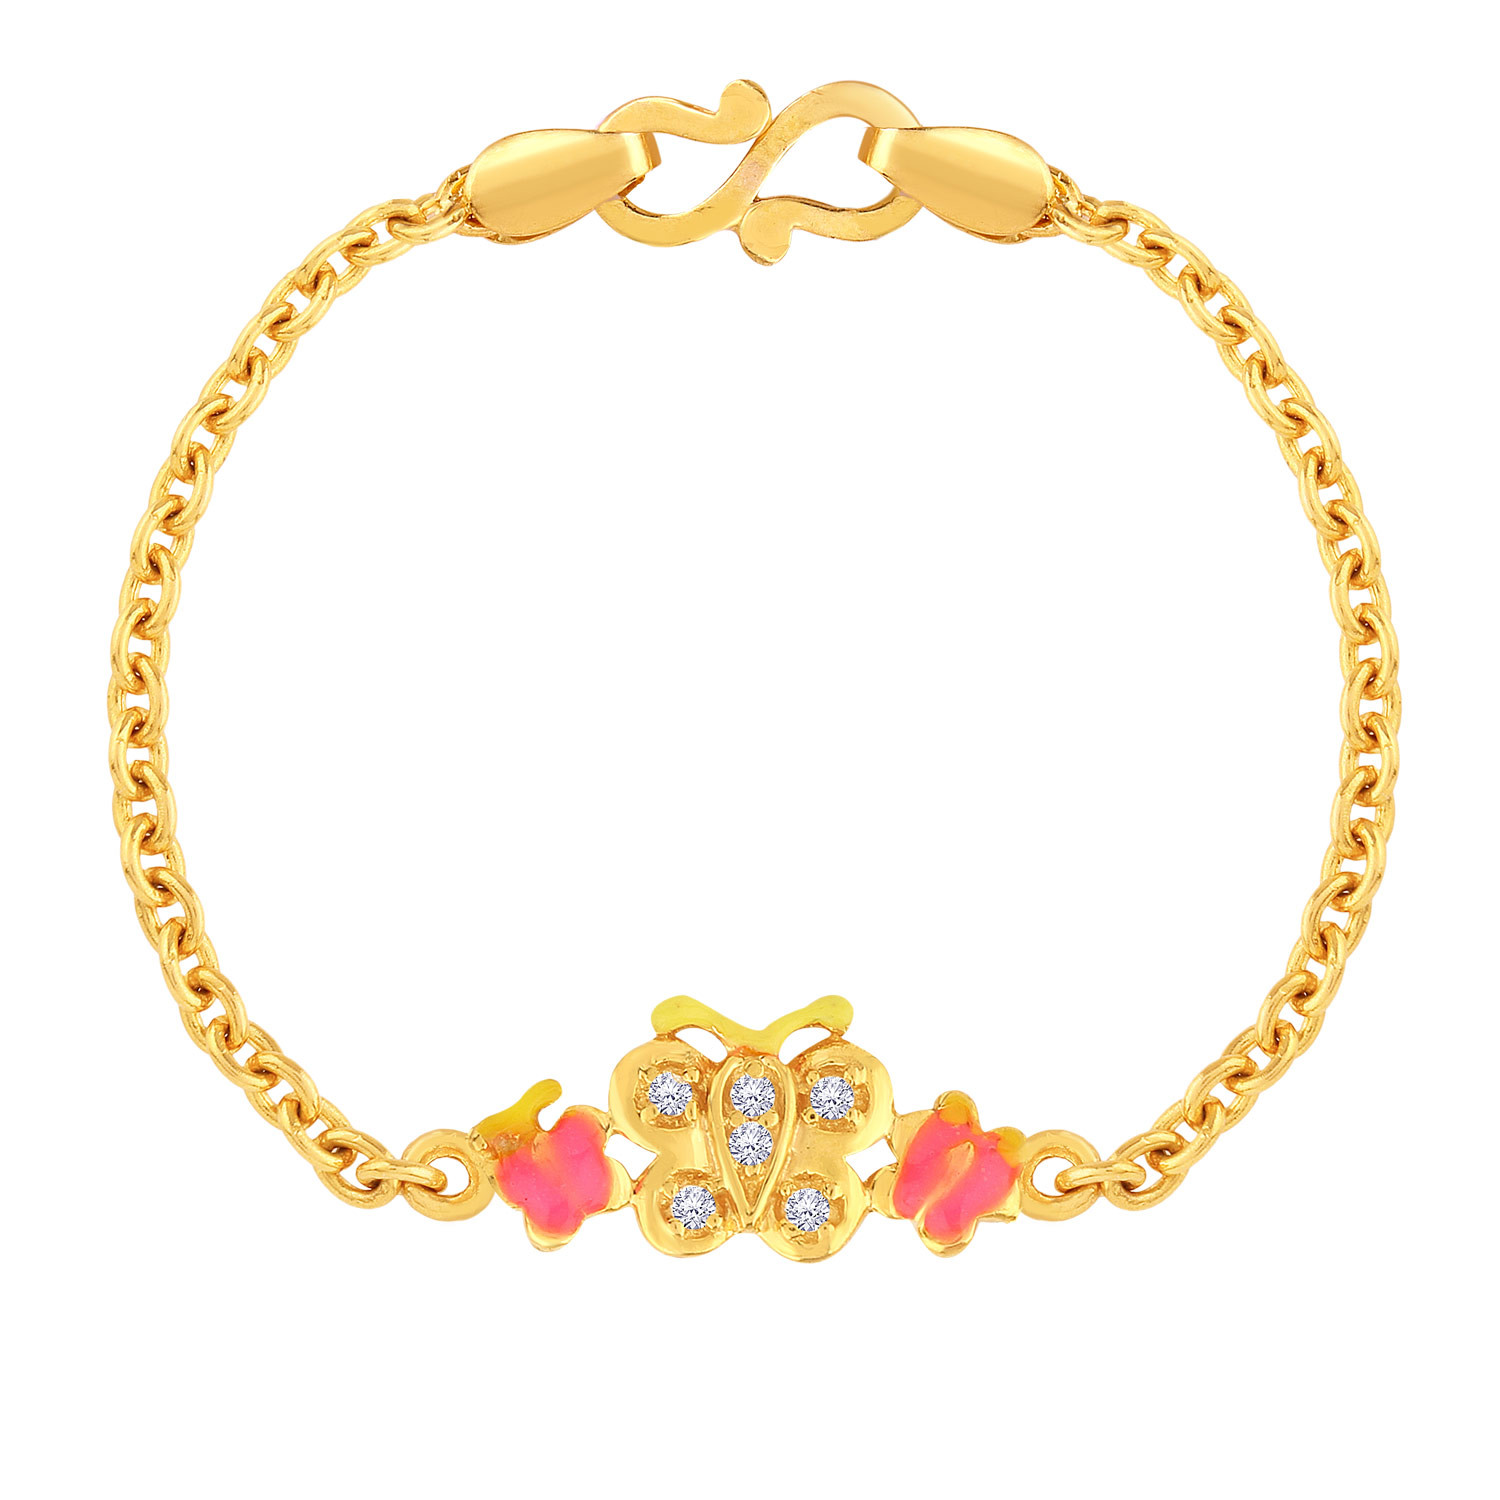 Starlet 22 KT Gold Studded Bracelet For Kids BRKDDZSG019